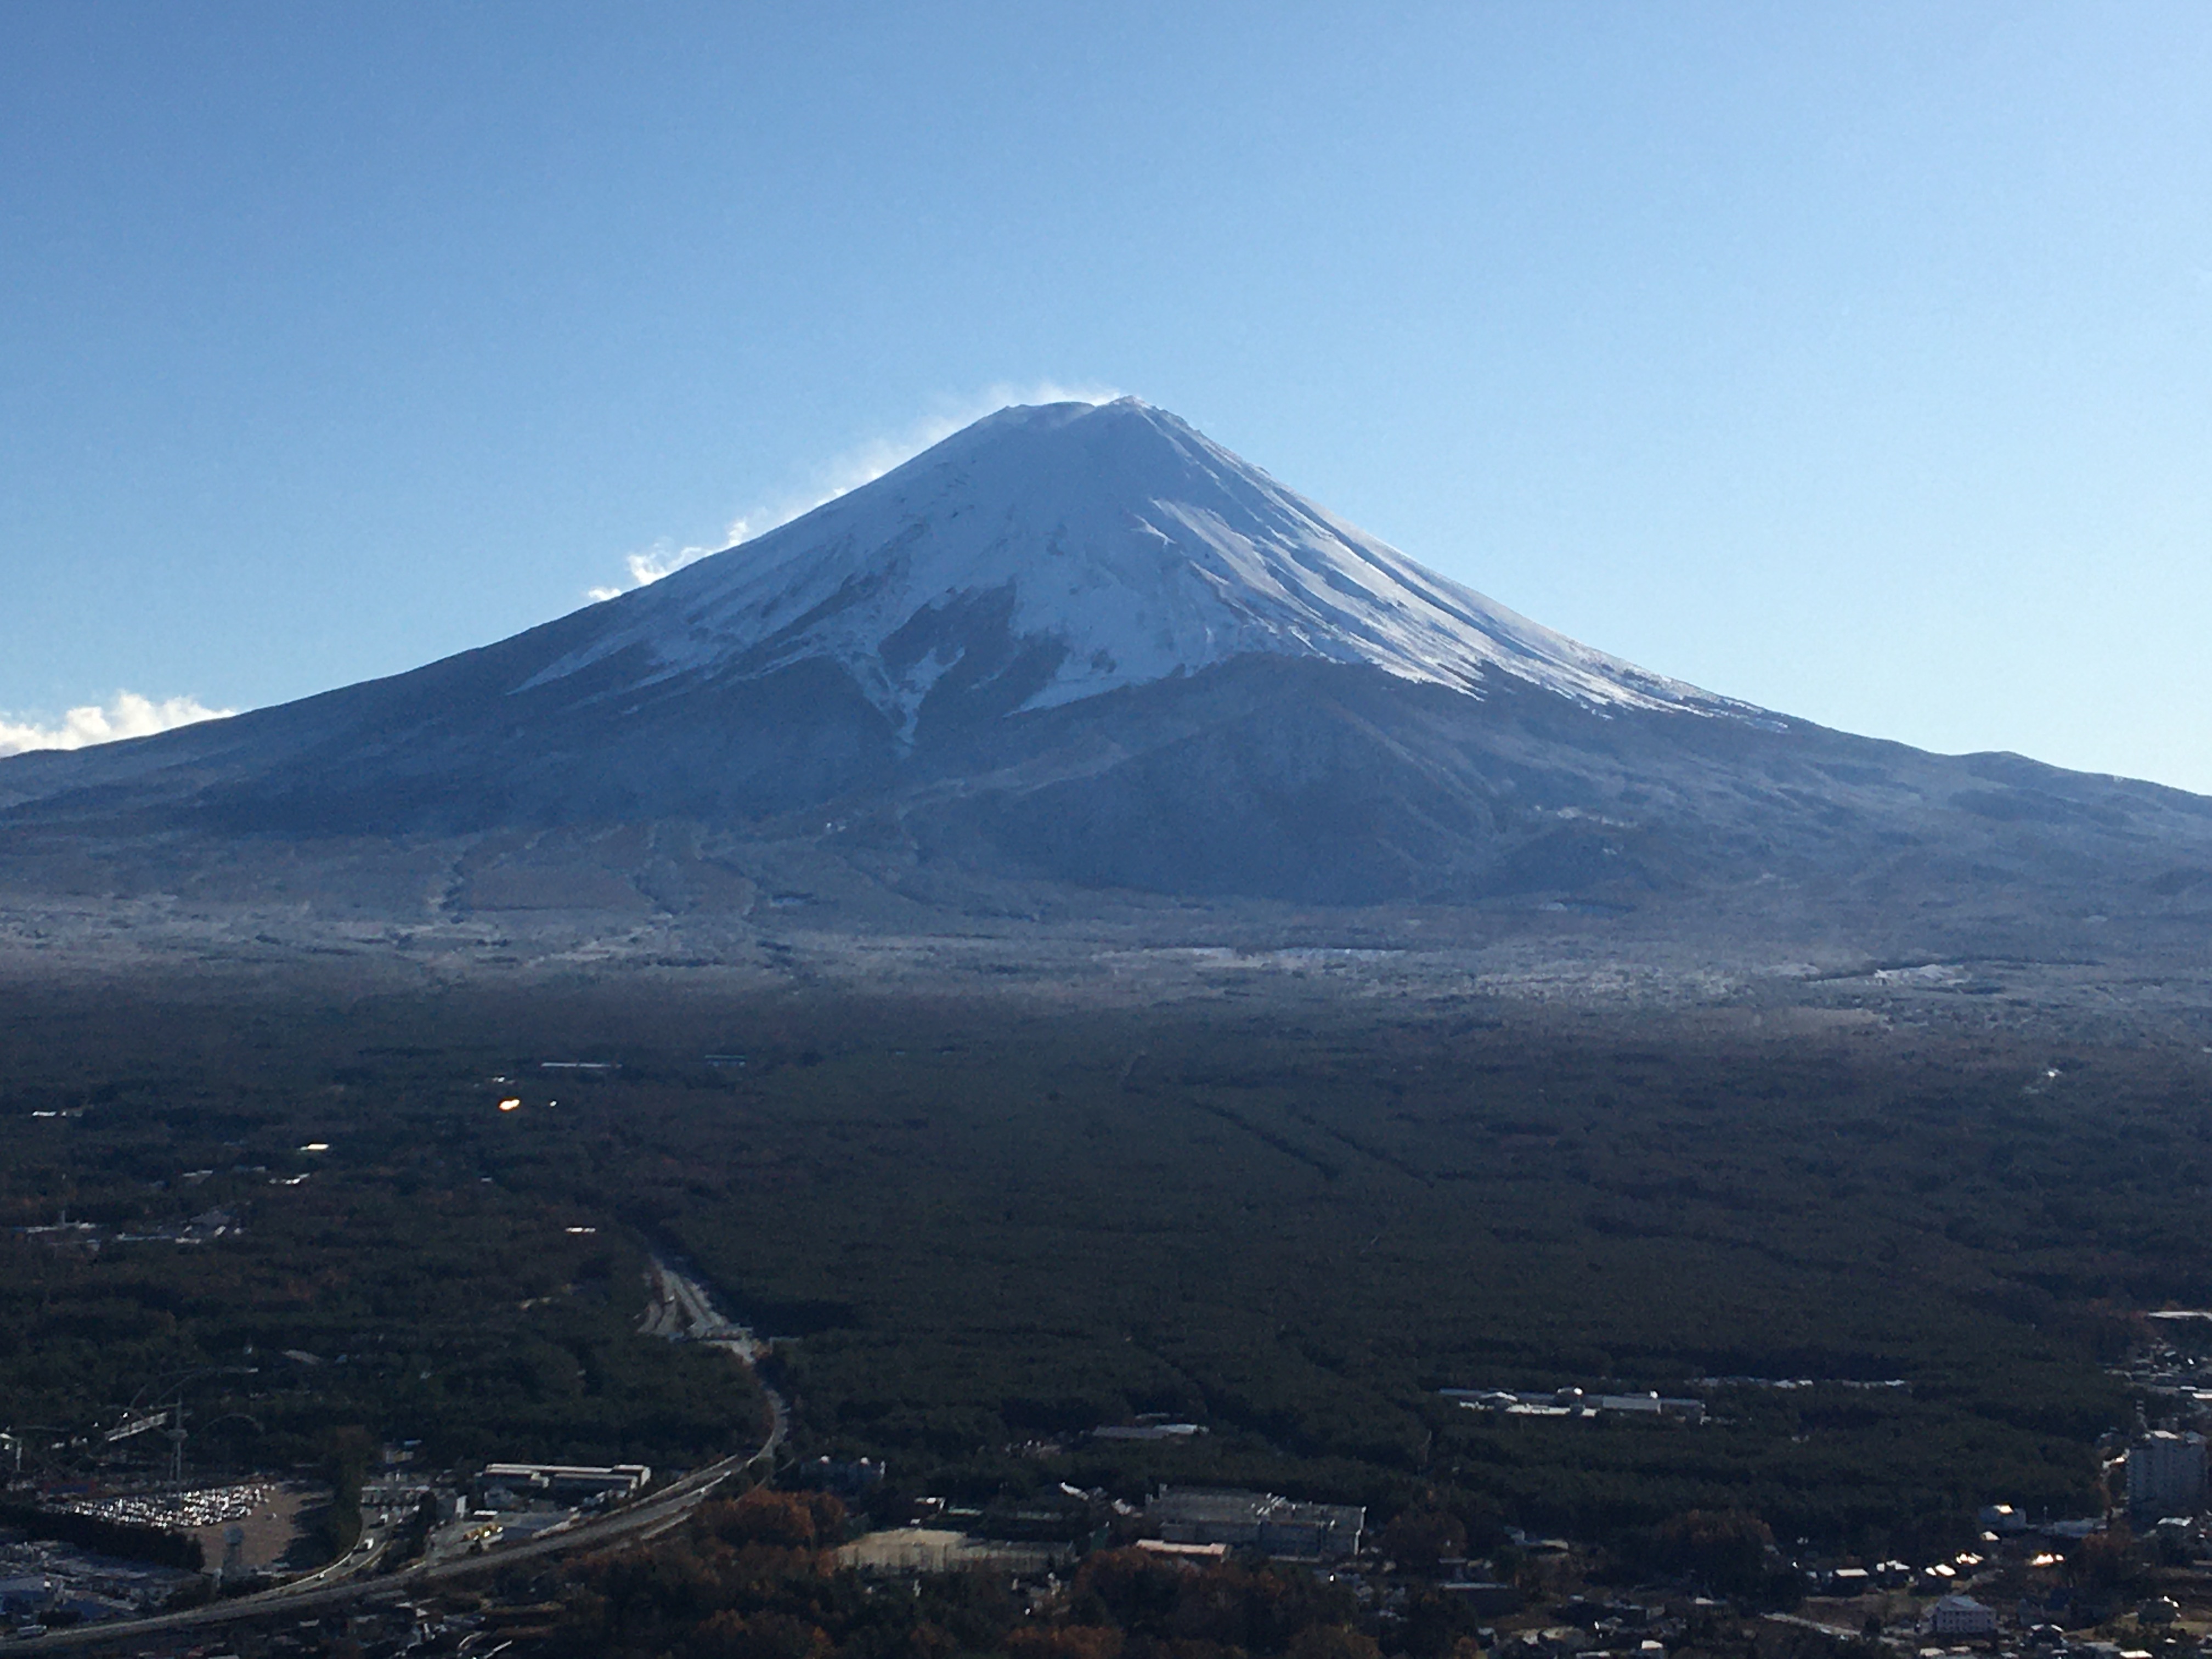 Mt.Fuji from the top station of Mt. Fuji Panoramic Ropeway